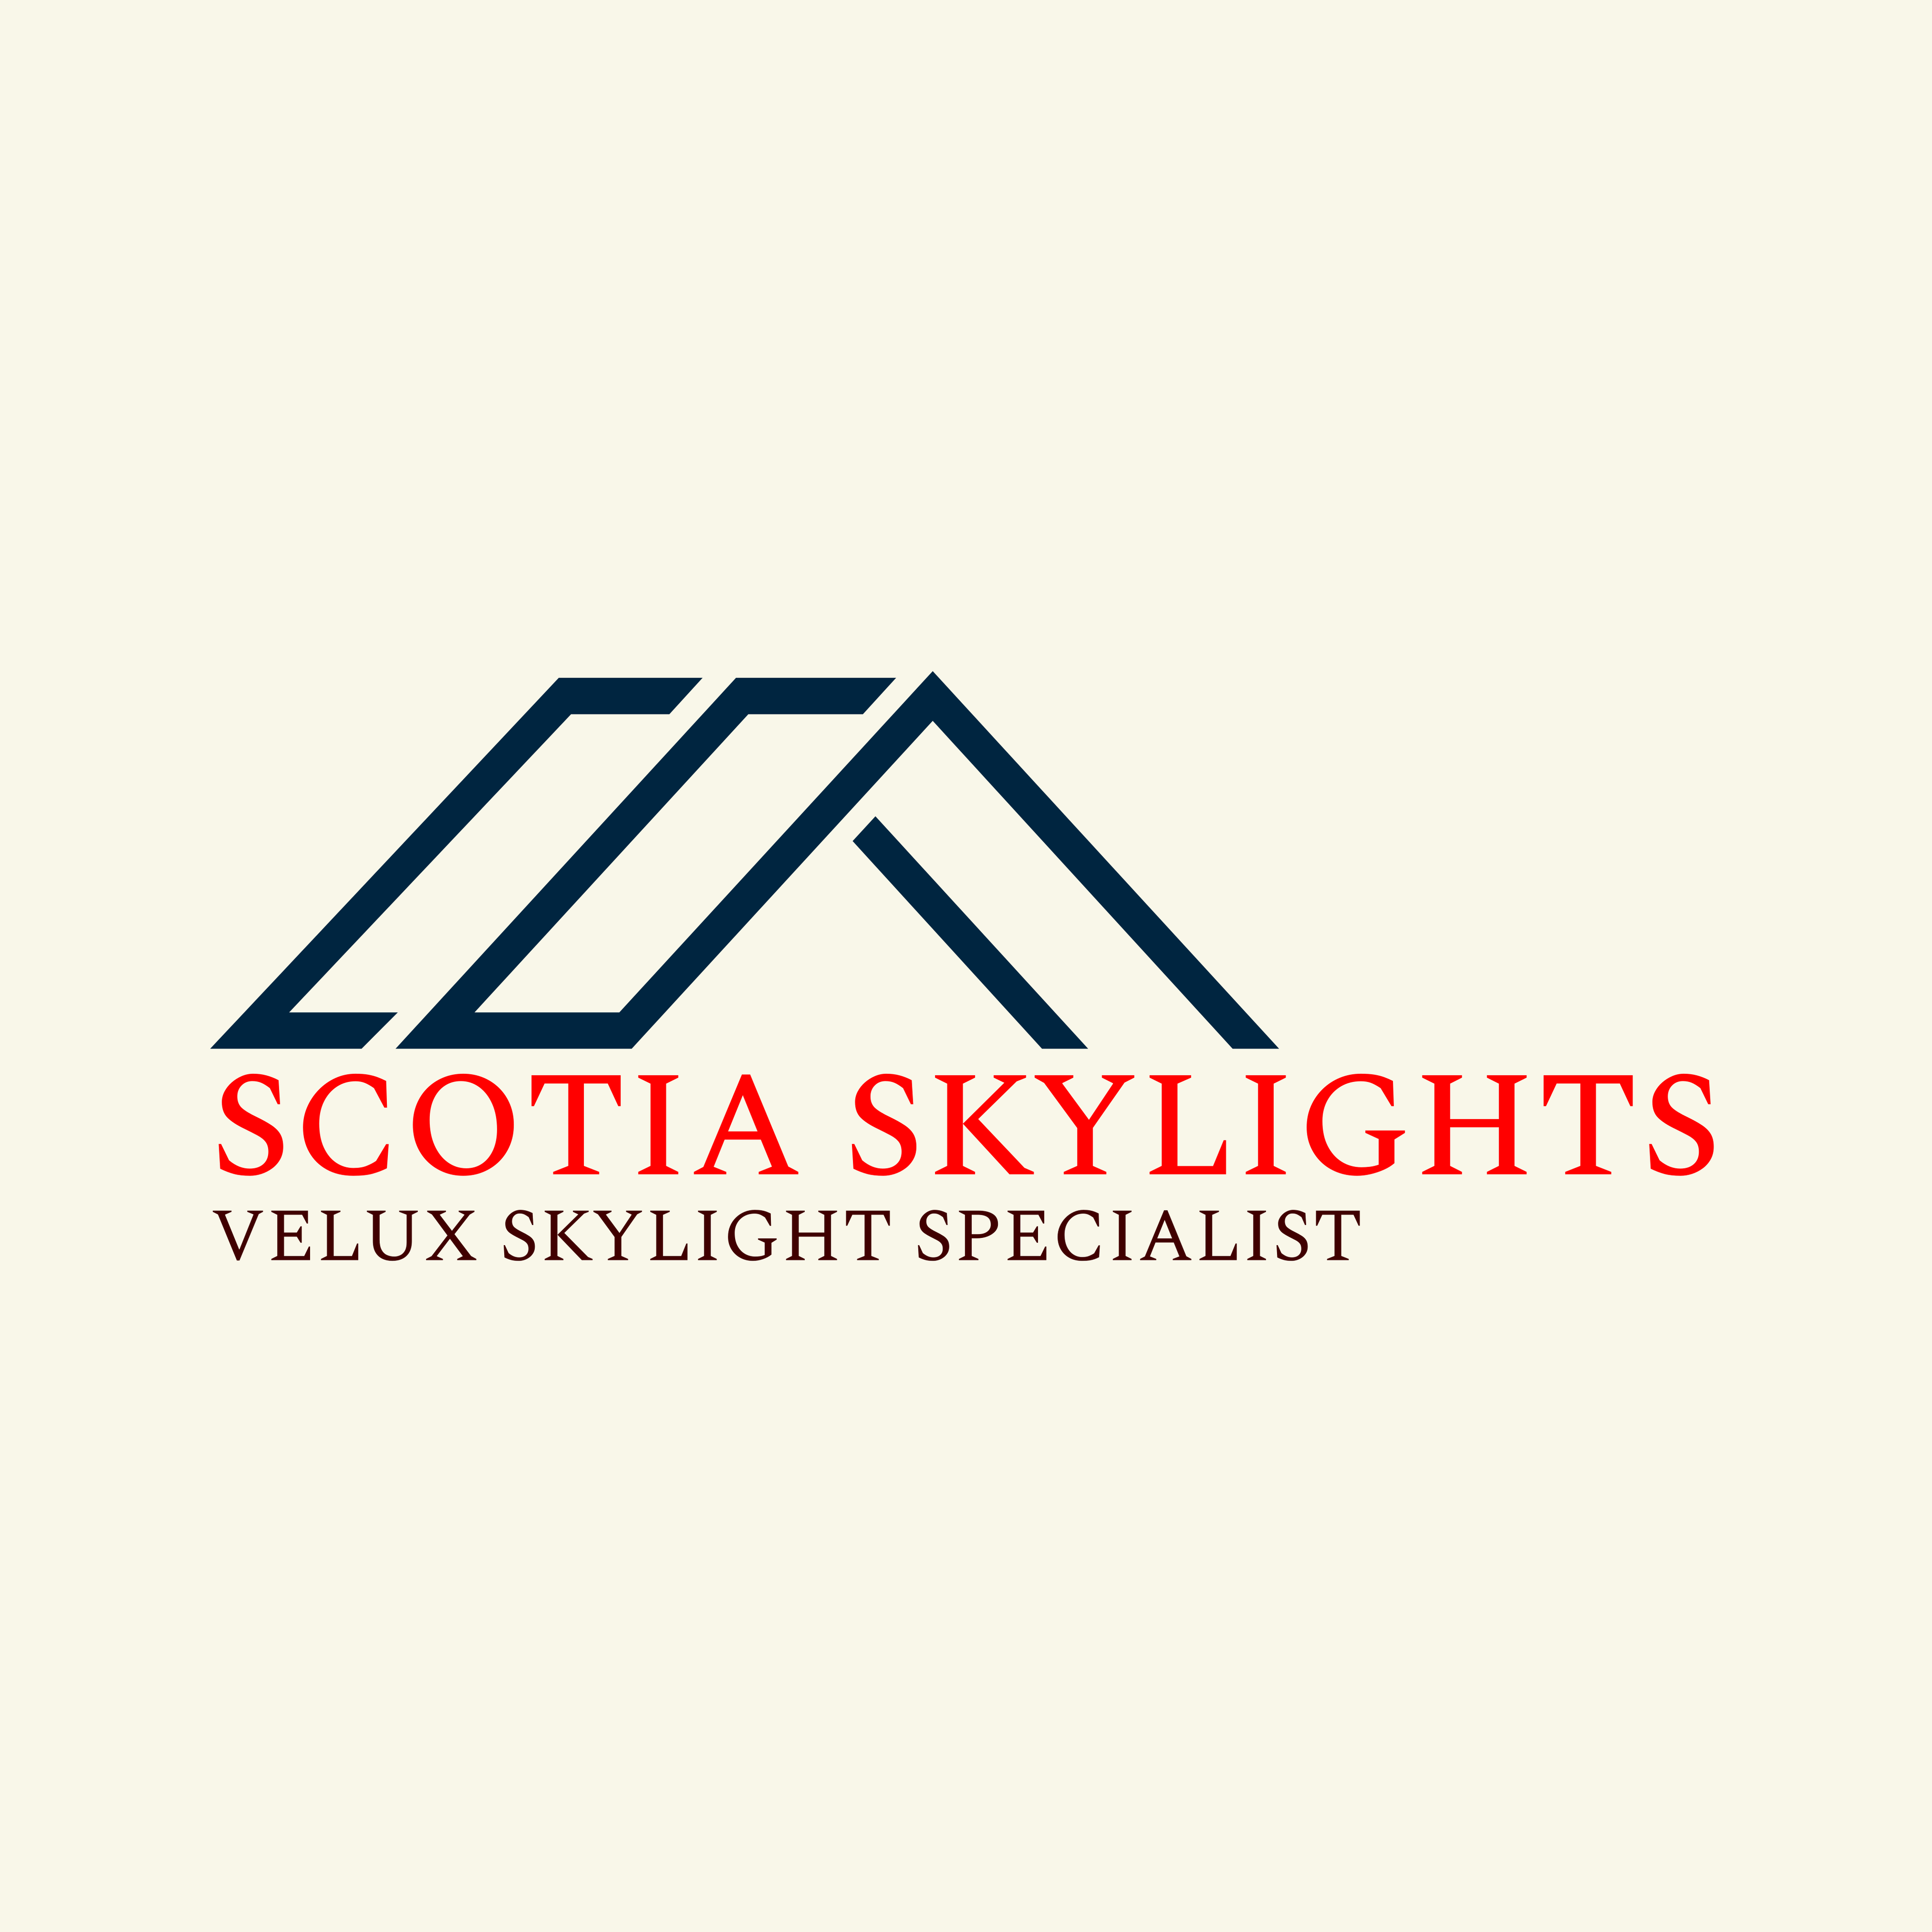 Scotia Skylights logo